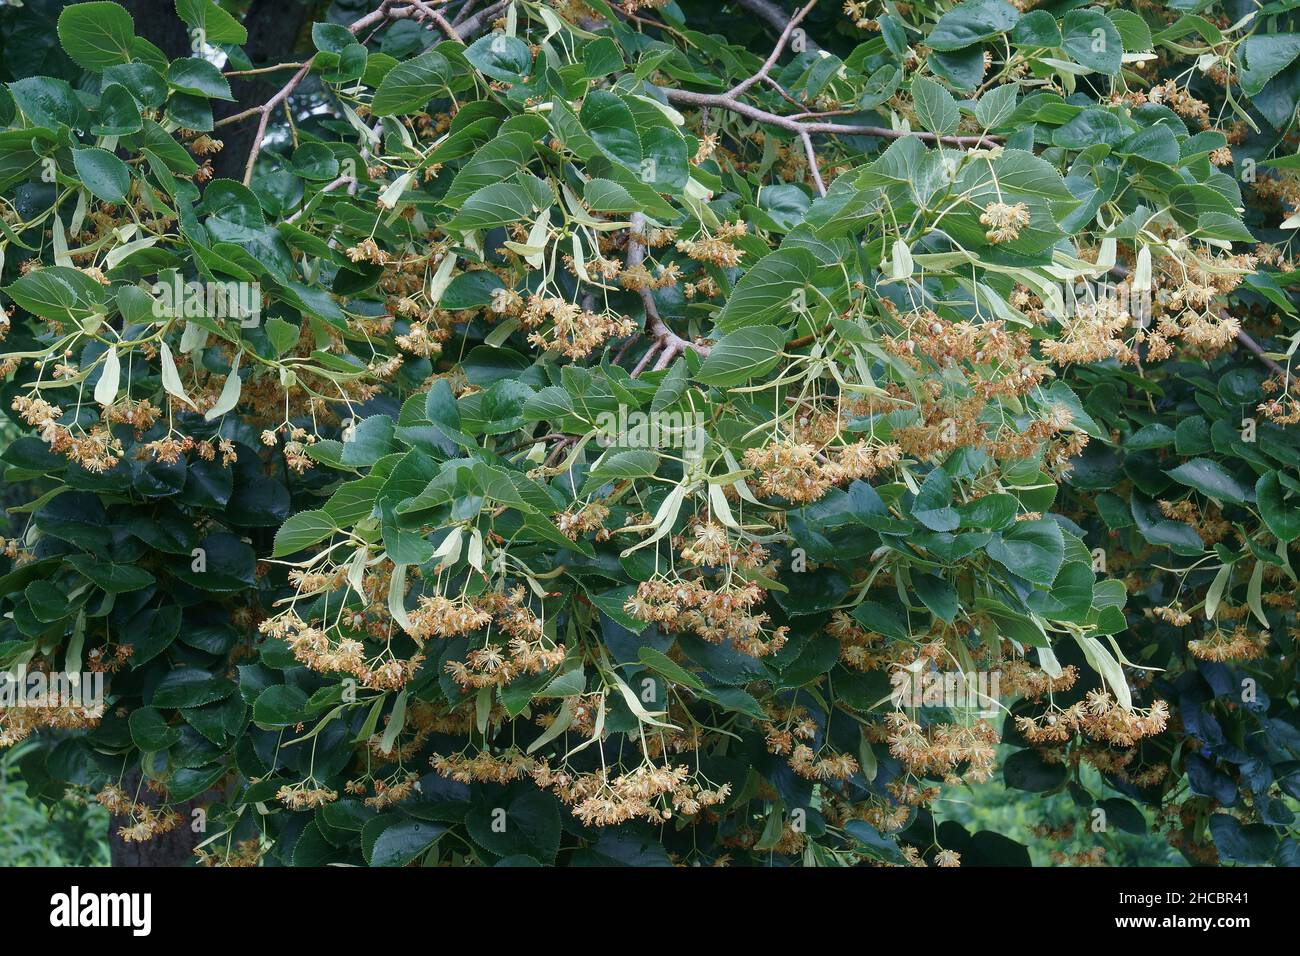 Caucasia linden (Tilia x euchlora). Called Crimean linden also. Hybrid between Tilia cordata and Tilia dasystyla. Stock Photo